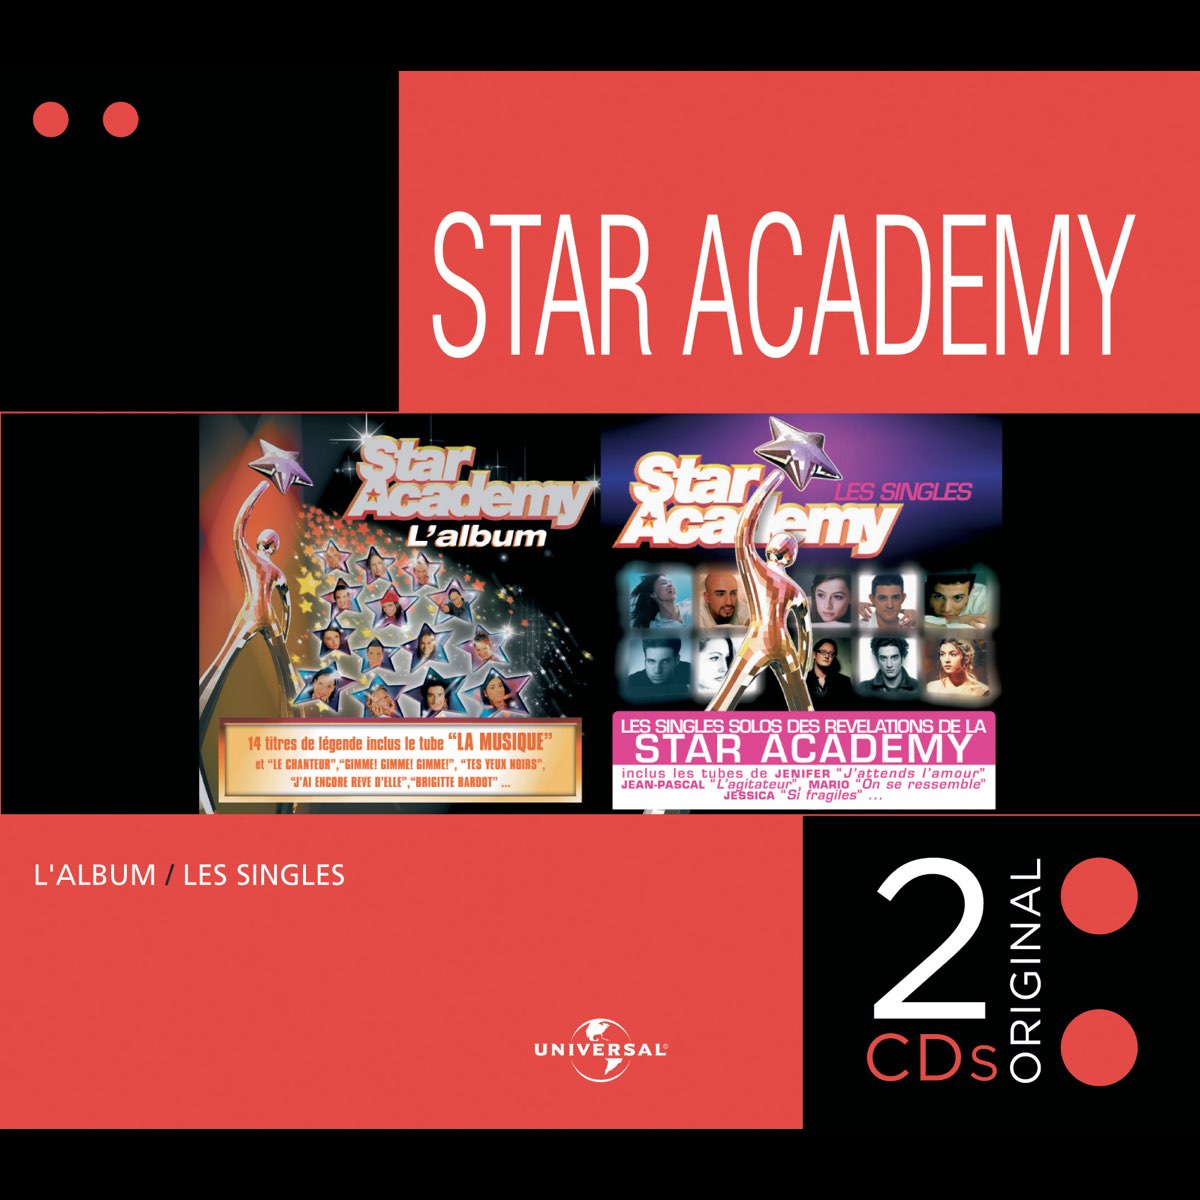 Star Academy : L'album / Les singles – Album par Star Academy – Apple Music